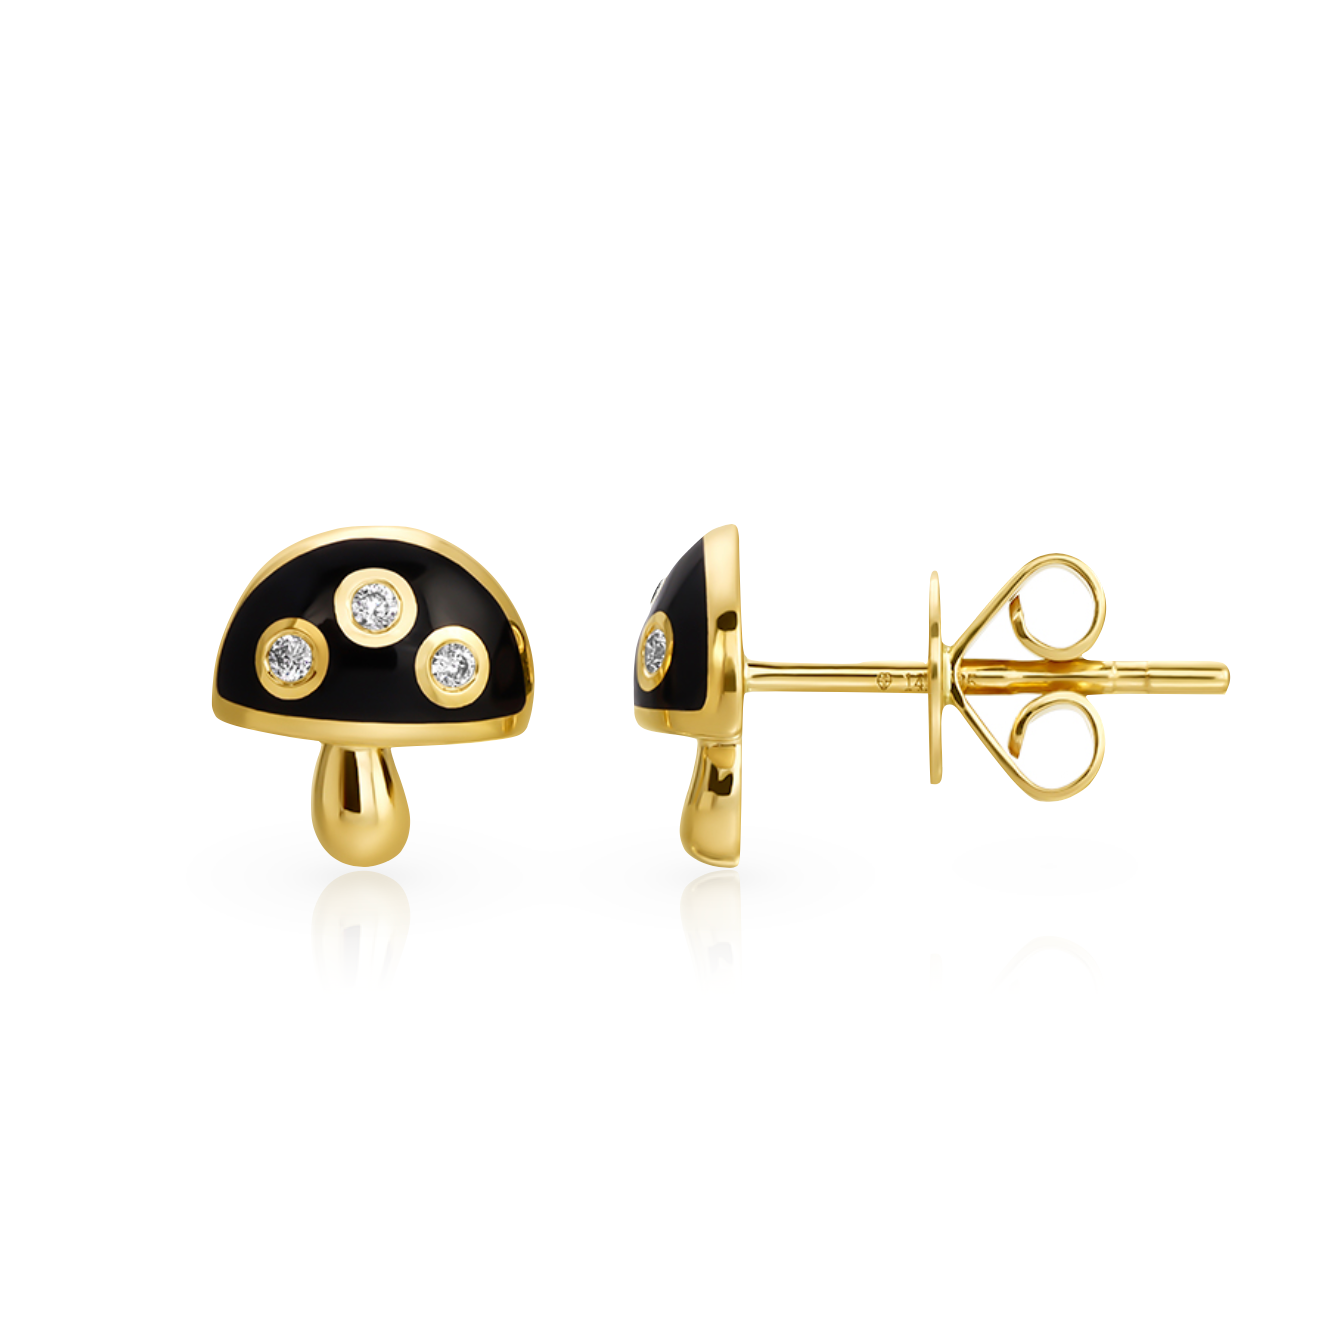 - Black and Gold Mushroom Earrings -